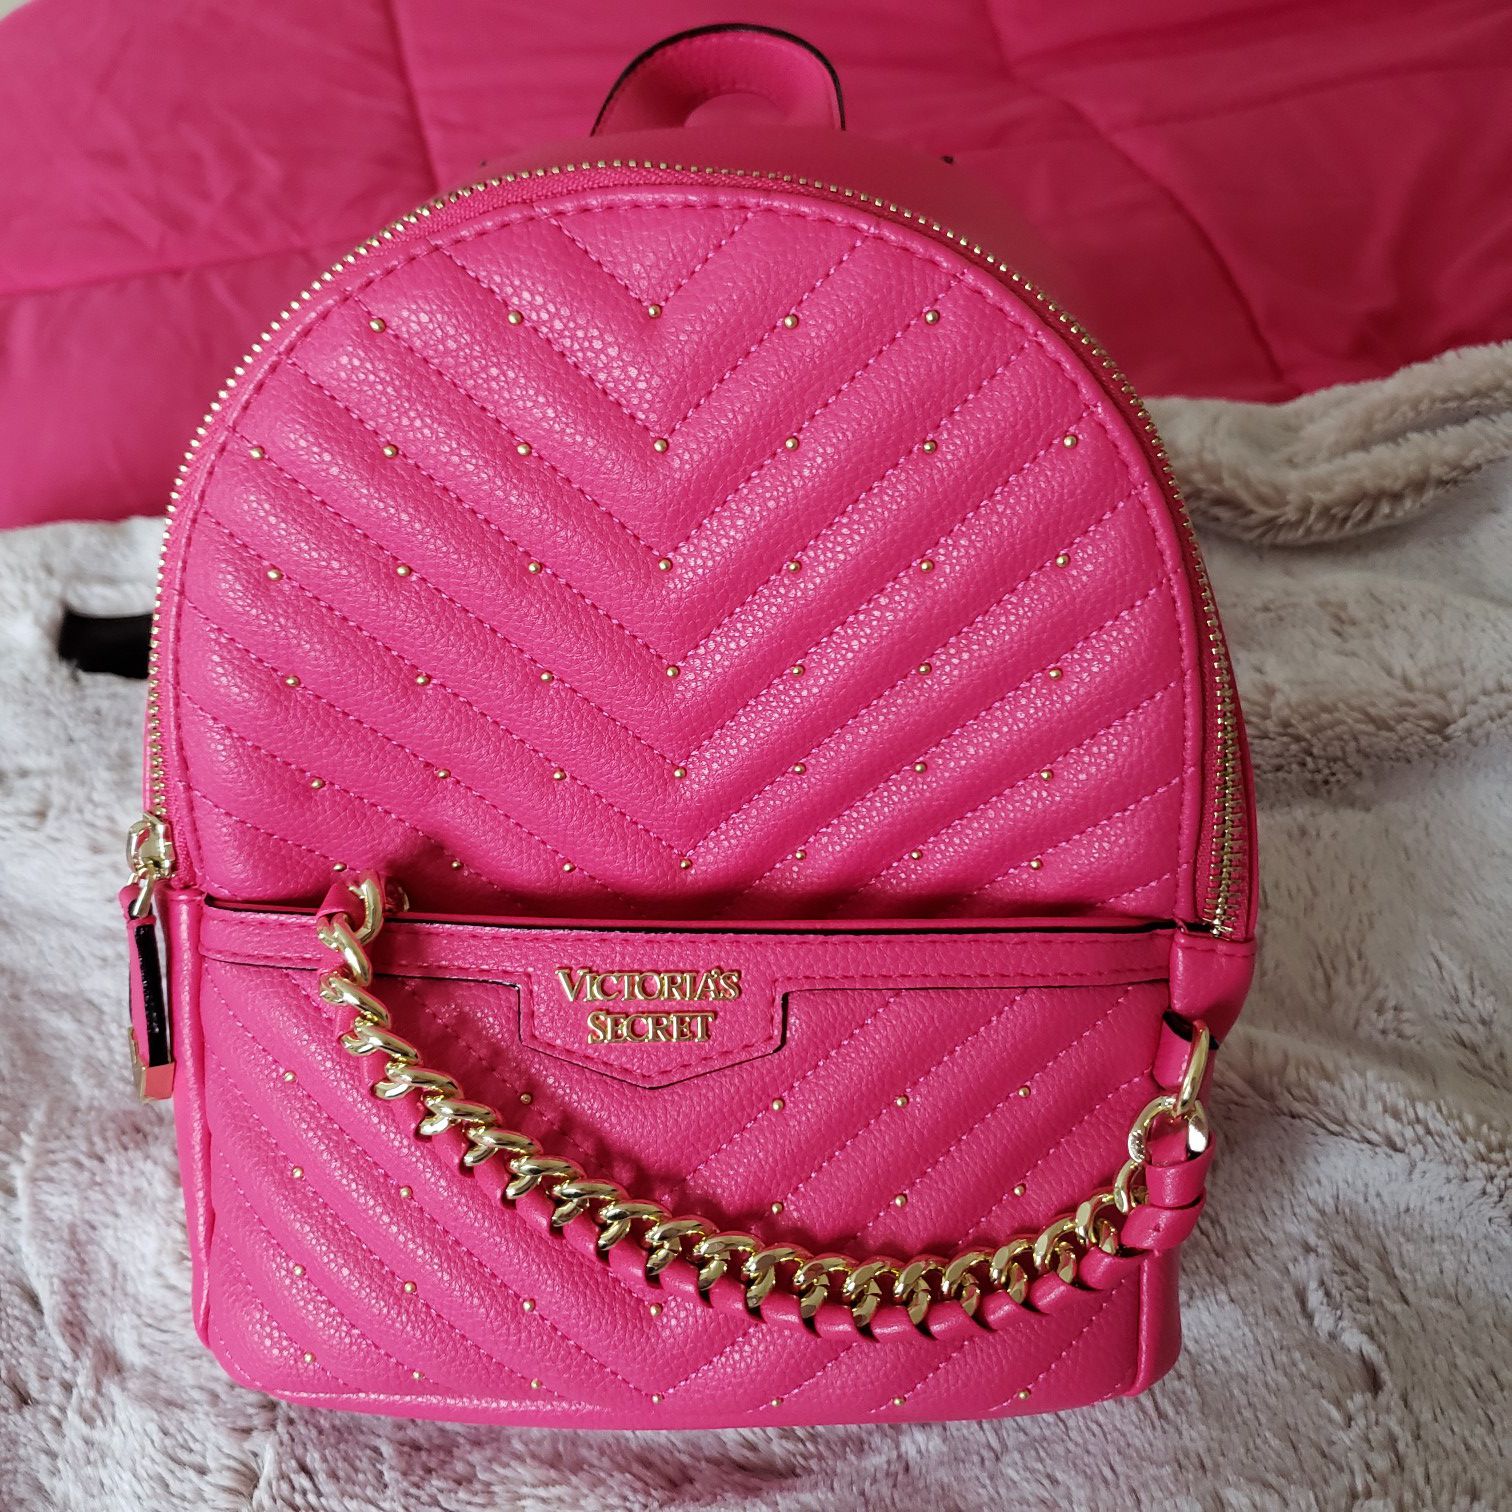 Brand new hot pink VS mini back pack purse